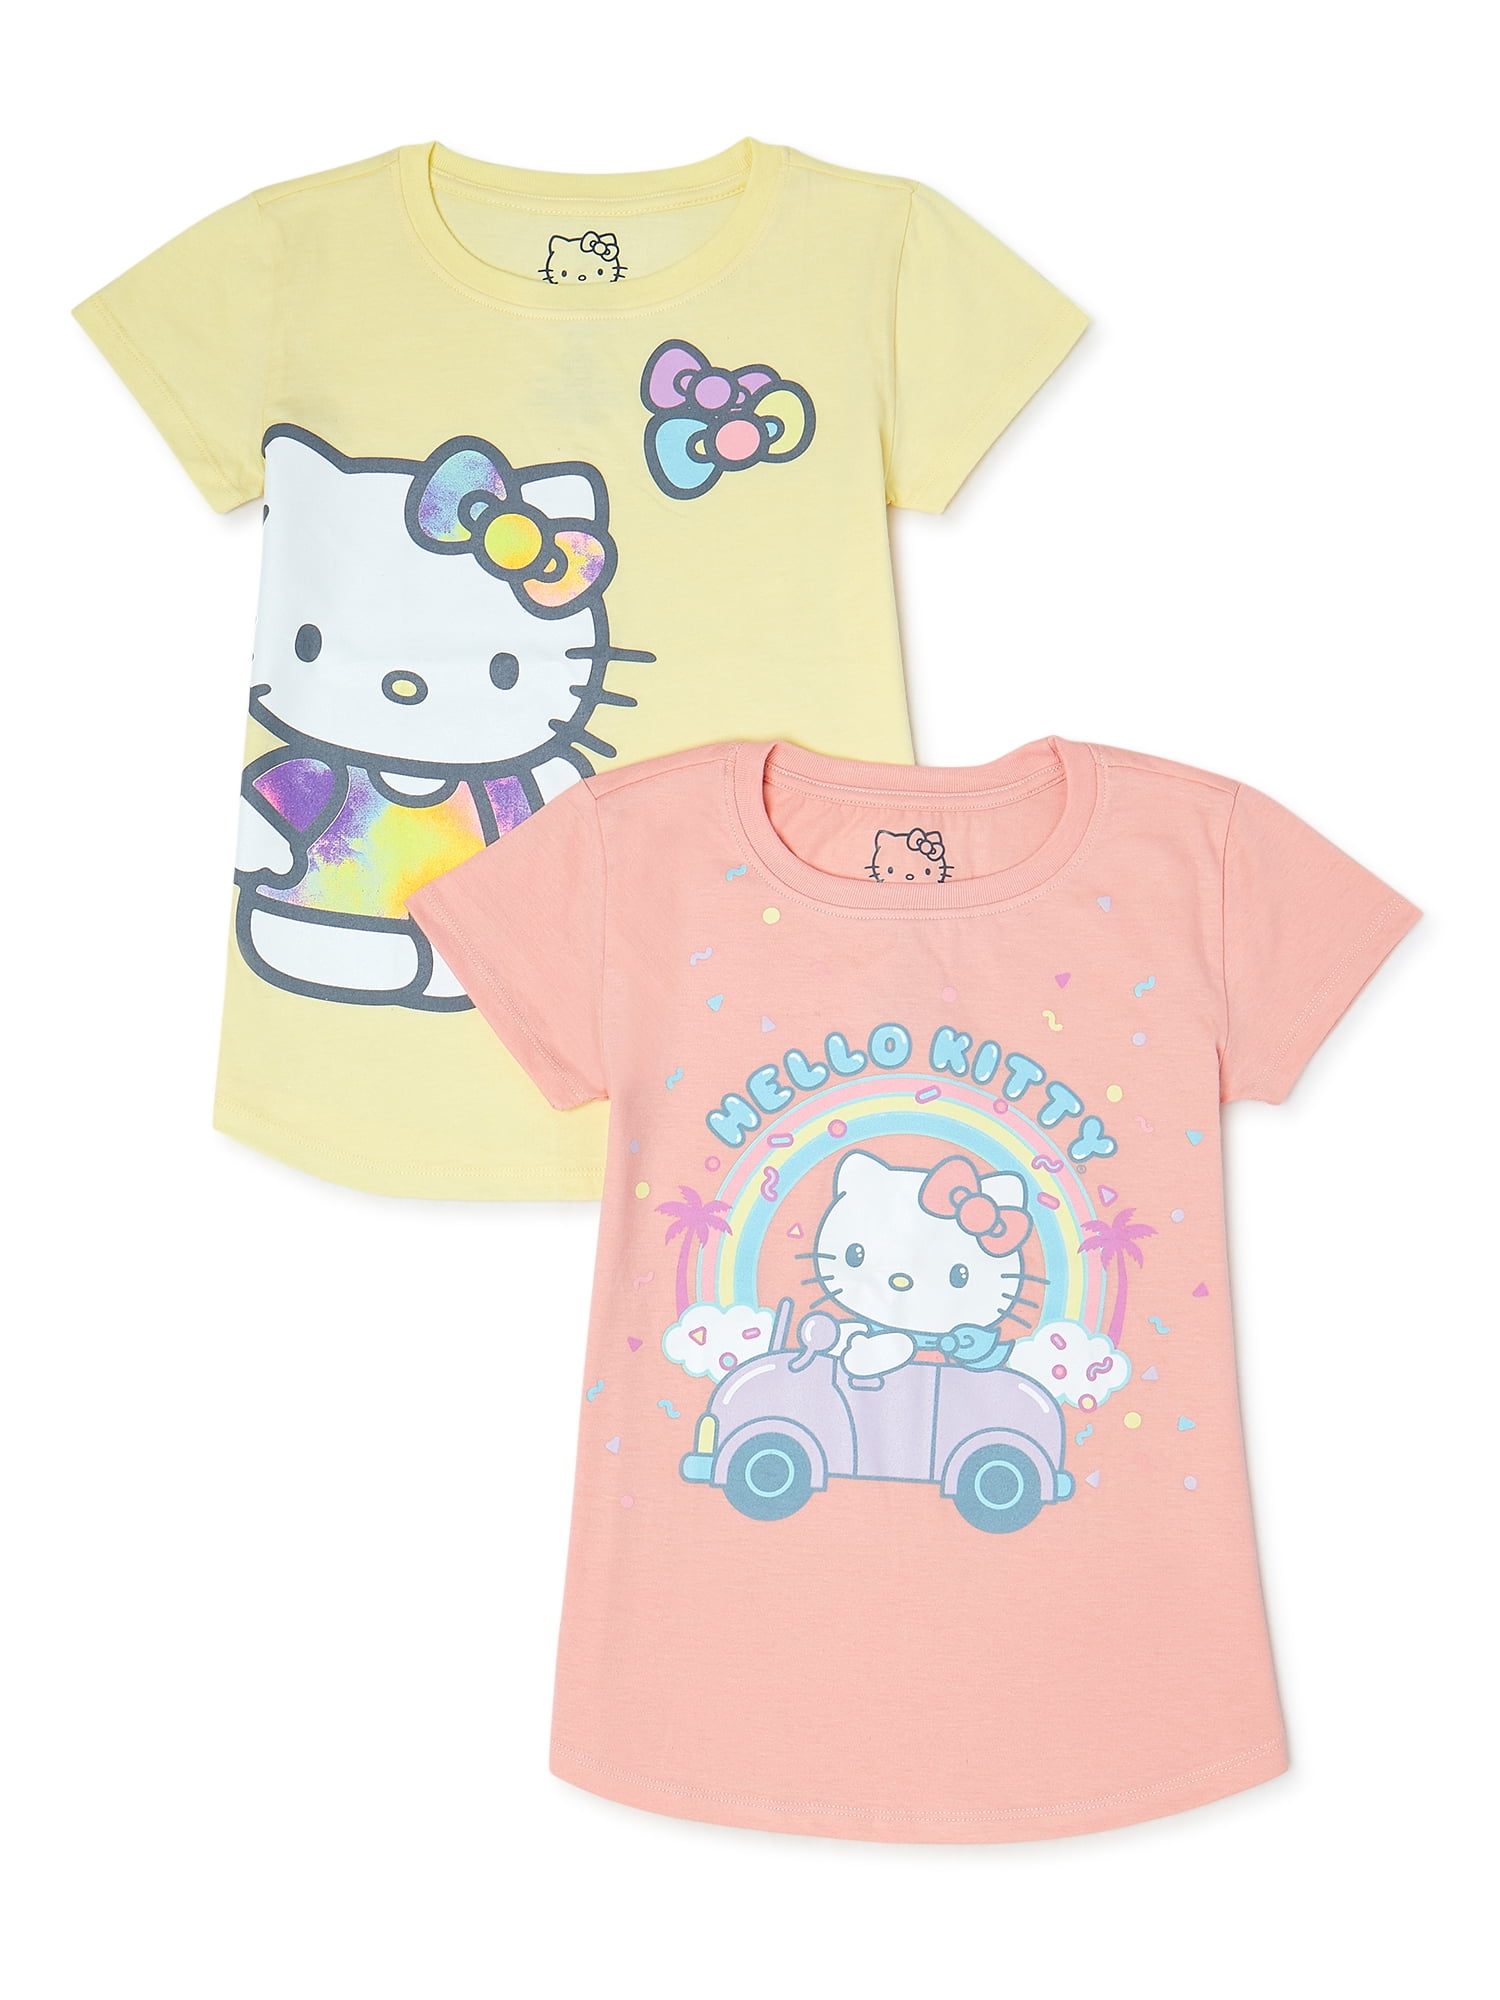 Litten Face Design Printed Kids T-Shirt Casual Crew Neck Tee for Girls Boys 